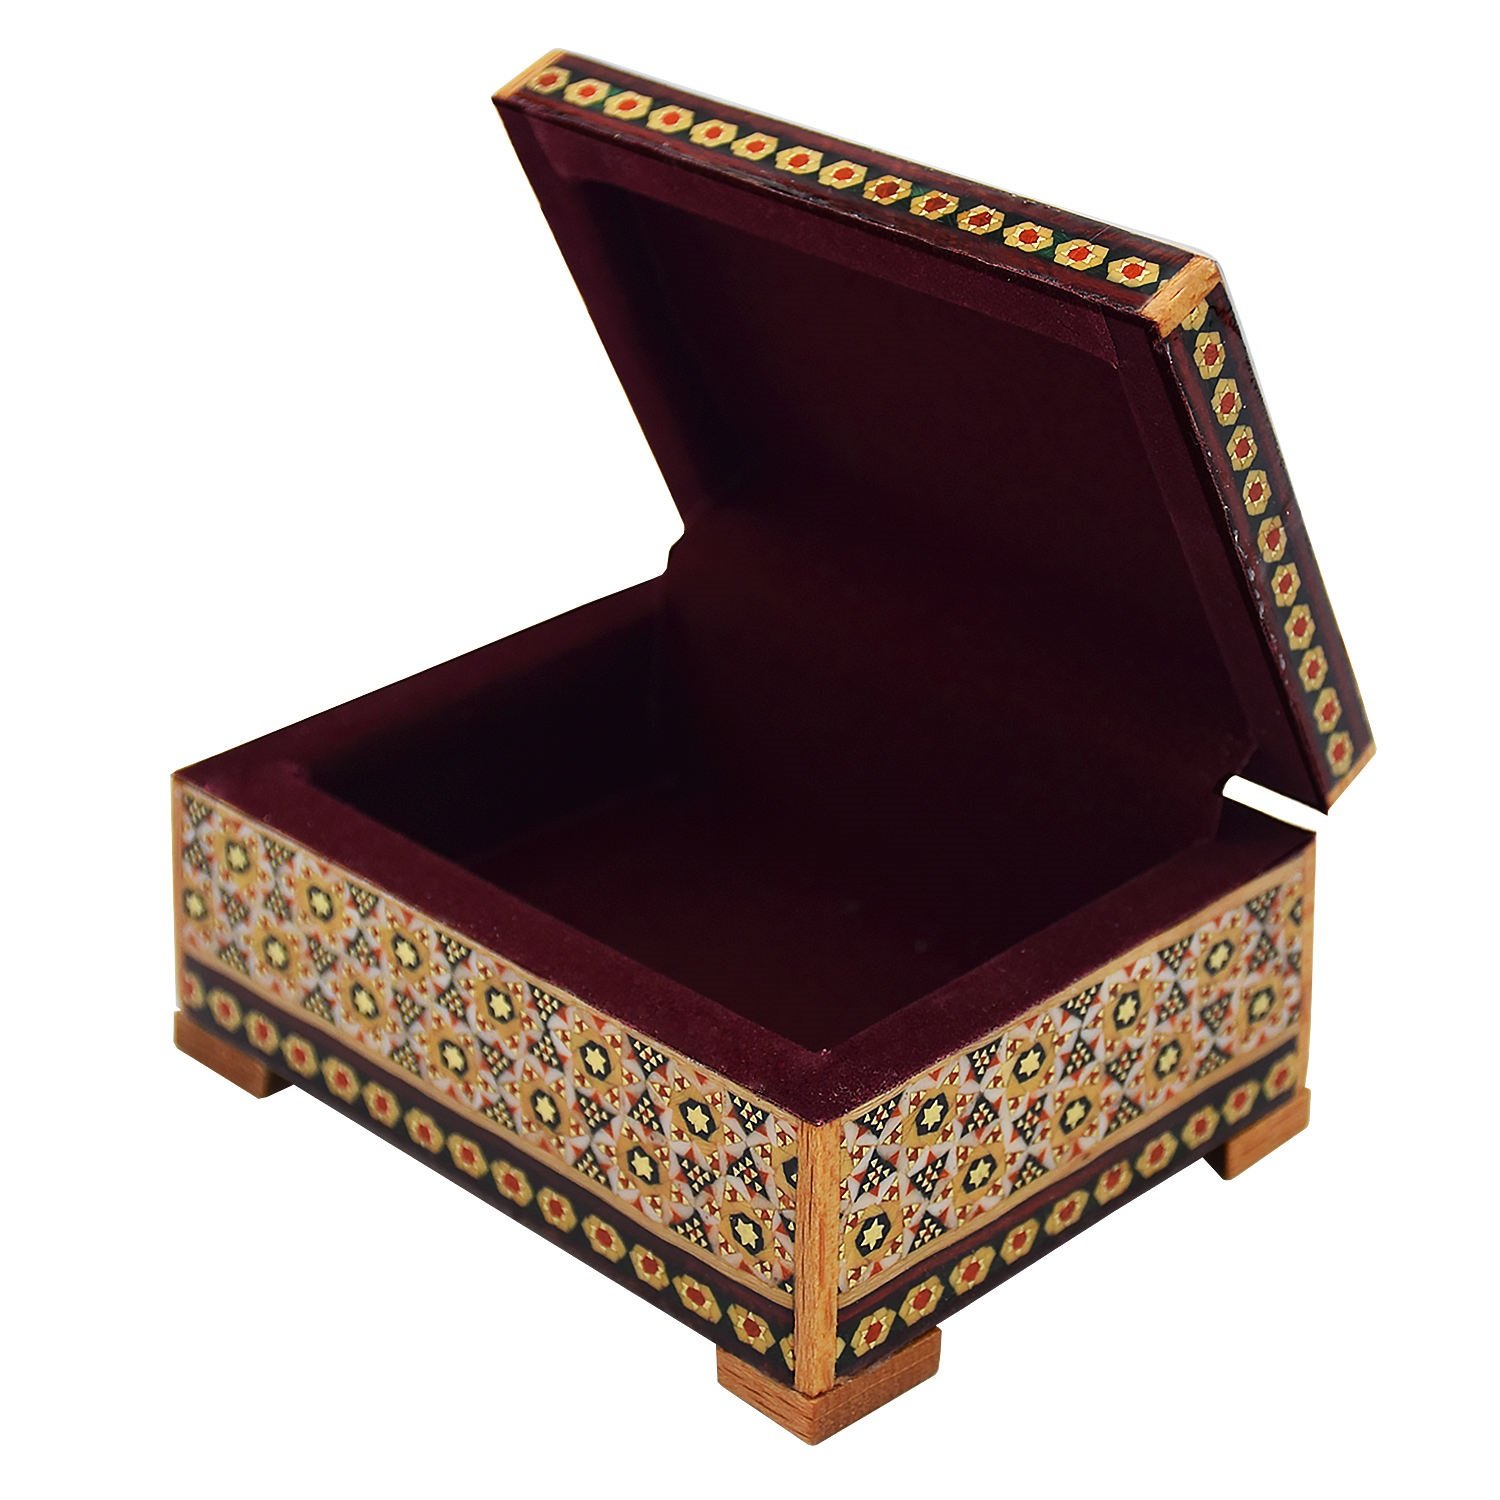 Khatam Jewelry box Chogan design code 484 , Khatam box, Inlaid, Khatam Jewelry box, Khatam